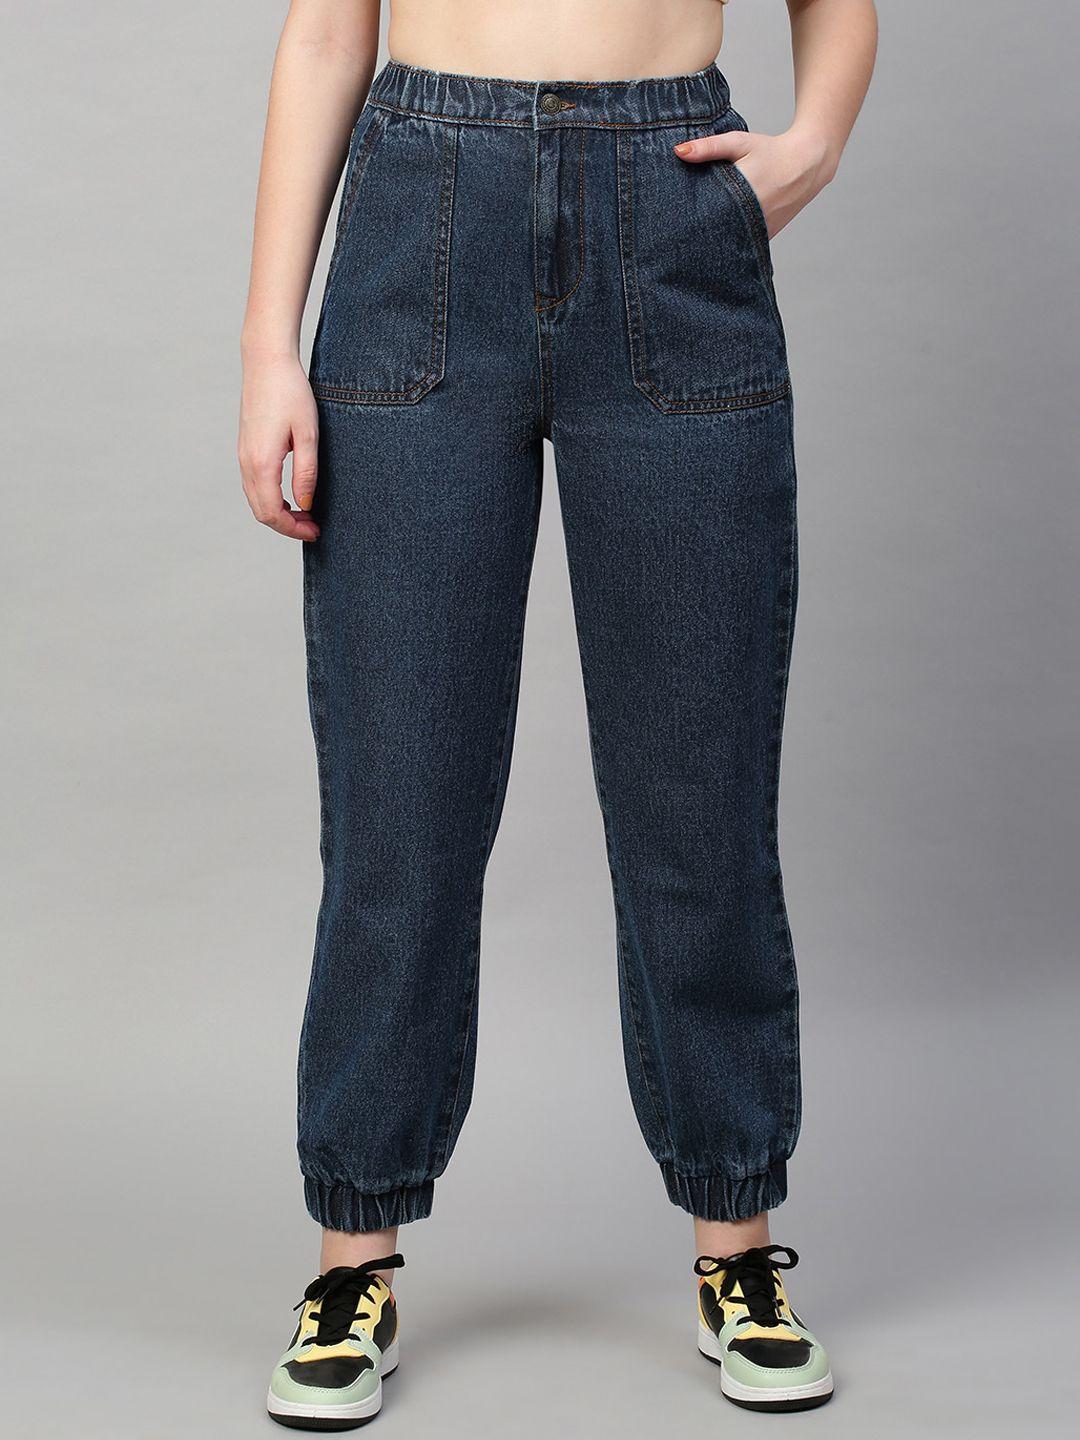 tarama-women-blue-jogger-high-rise-jeans